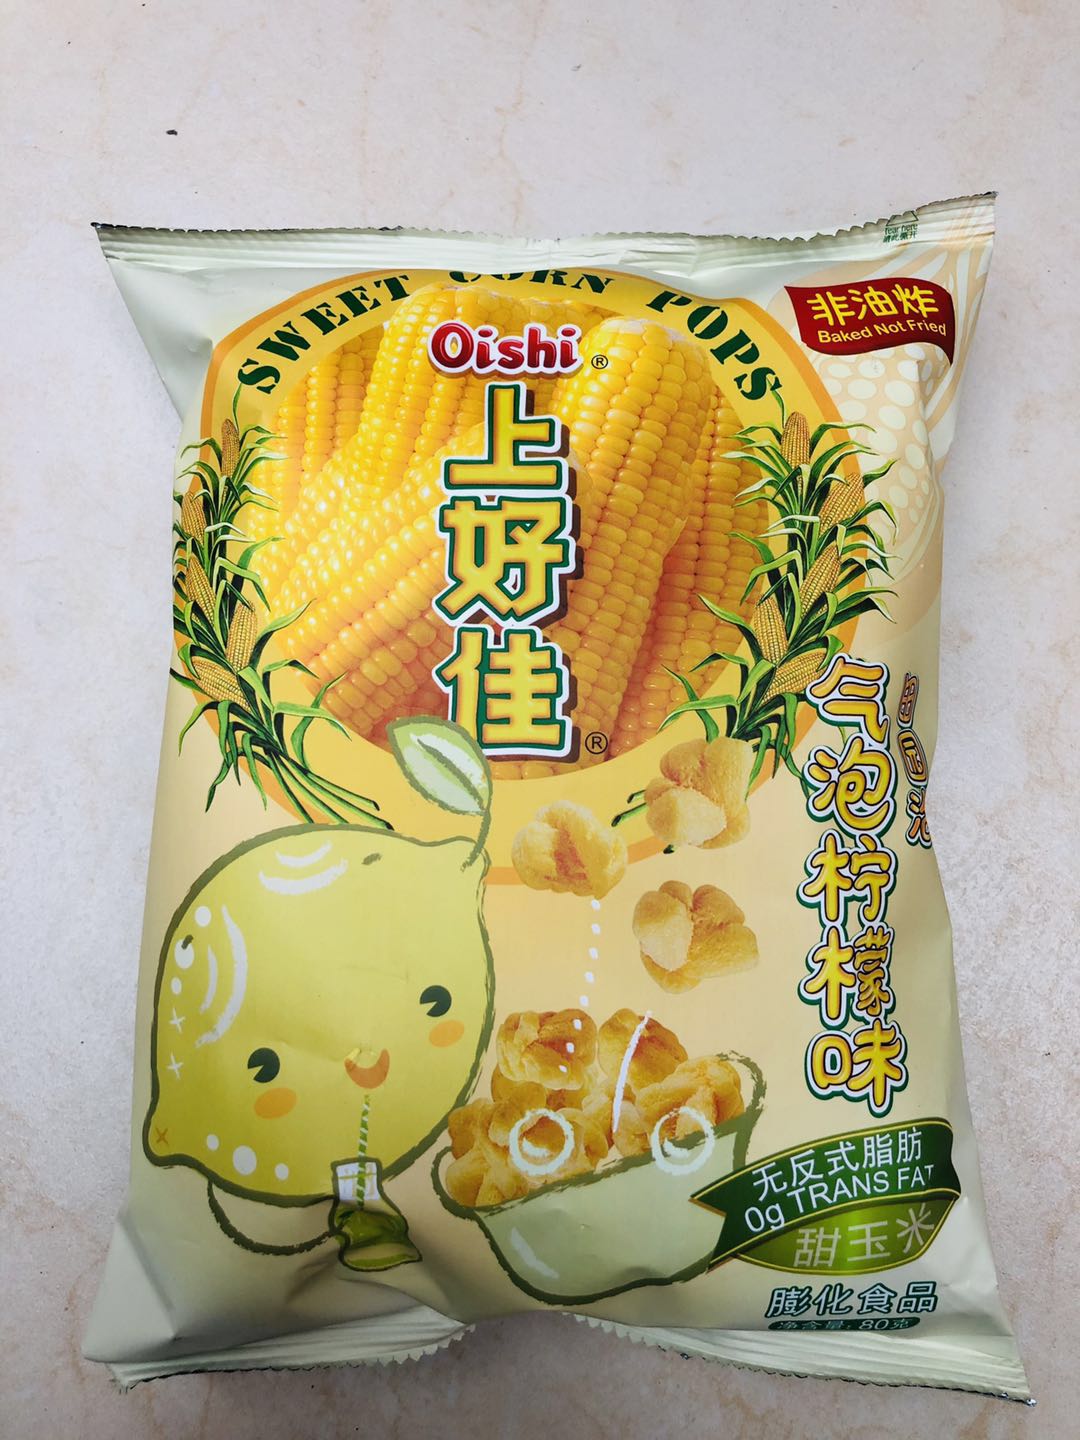 oishi/上好佳玉米田园泡柠檬味80克